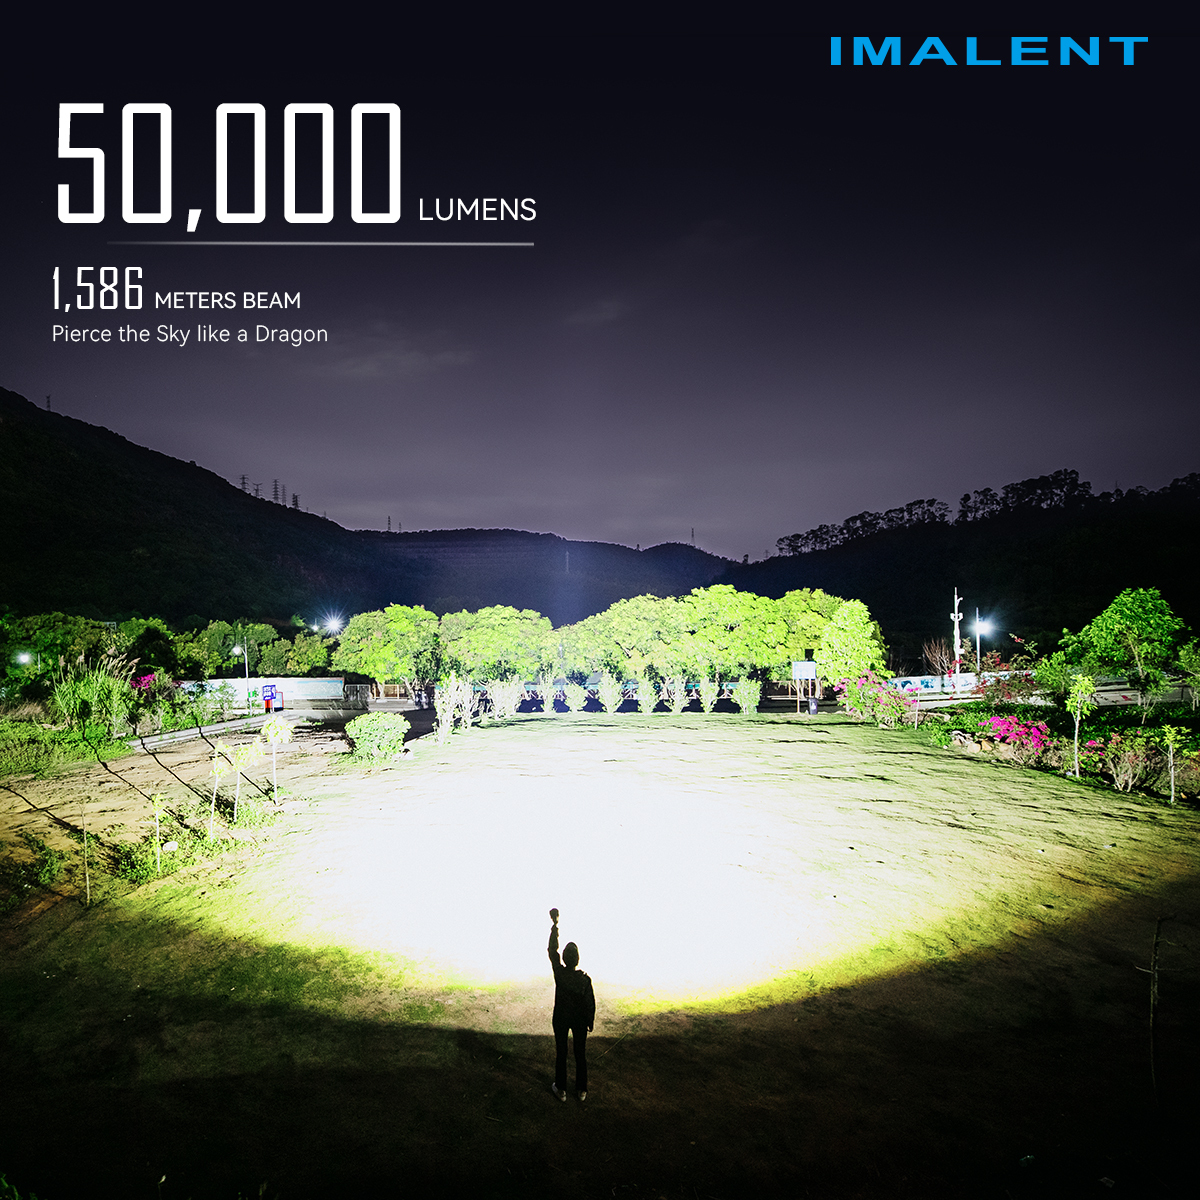 Imalent MR90 1 x Luminus SBT90.2 and 8 x Cree XHP70.2 LEDs 50000 Lumens 1586 Meters Spolight Flashlight Search Light